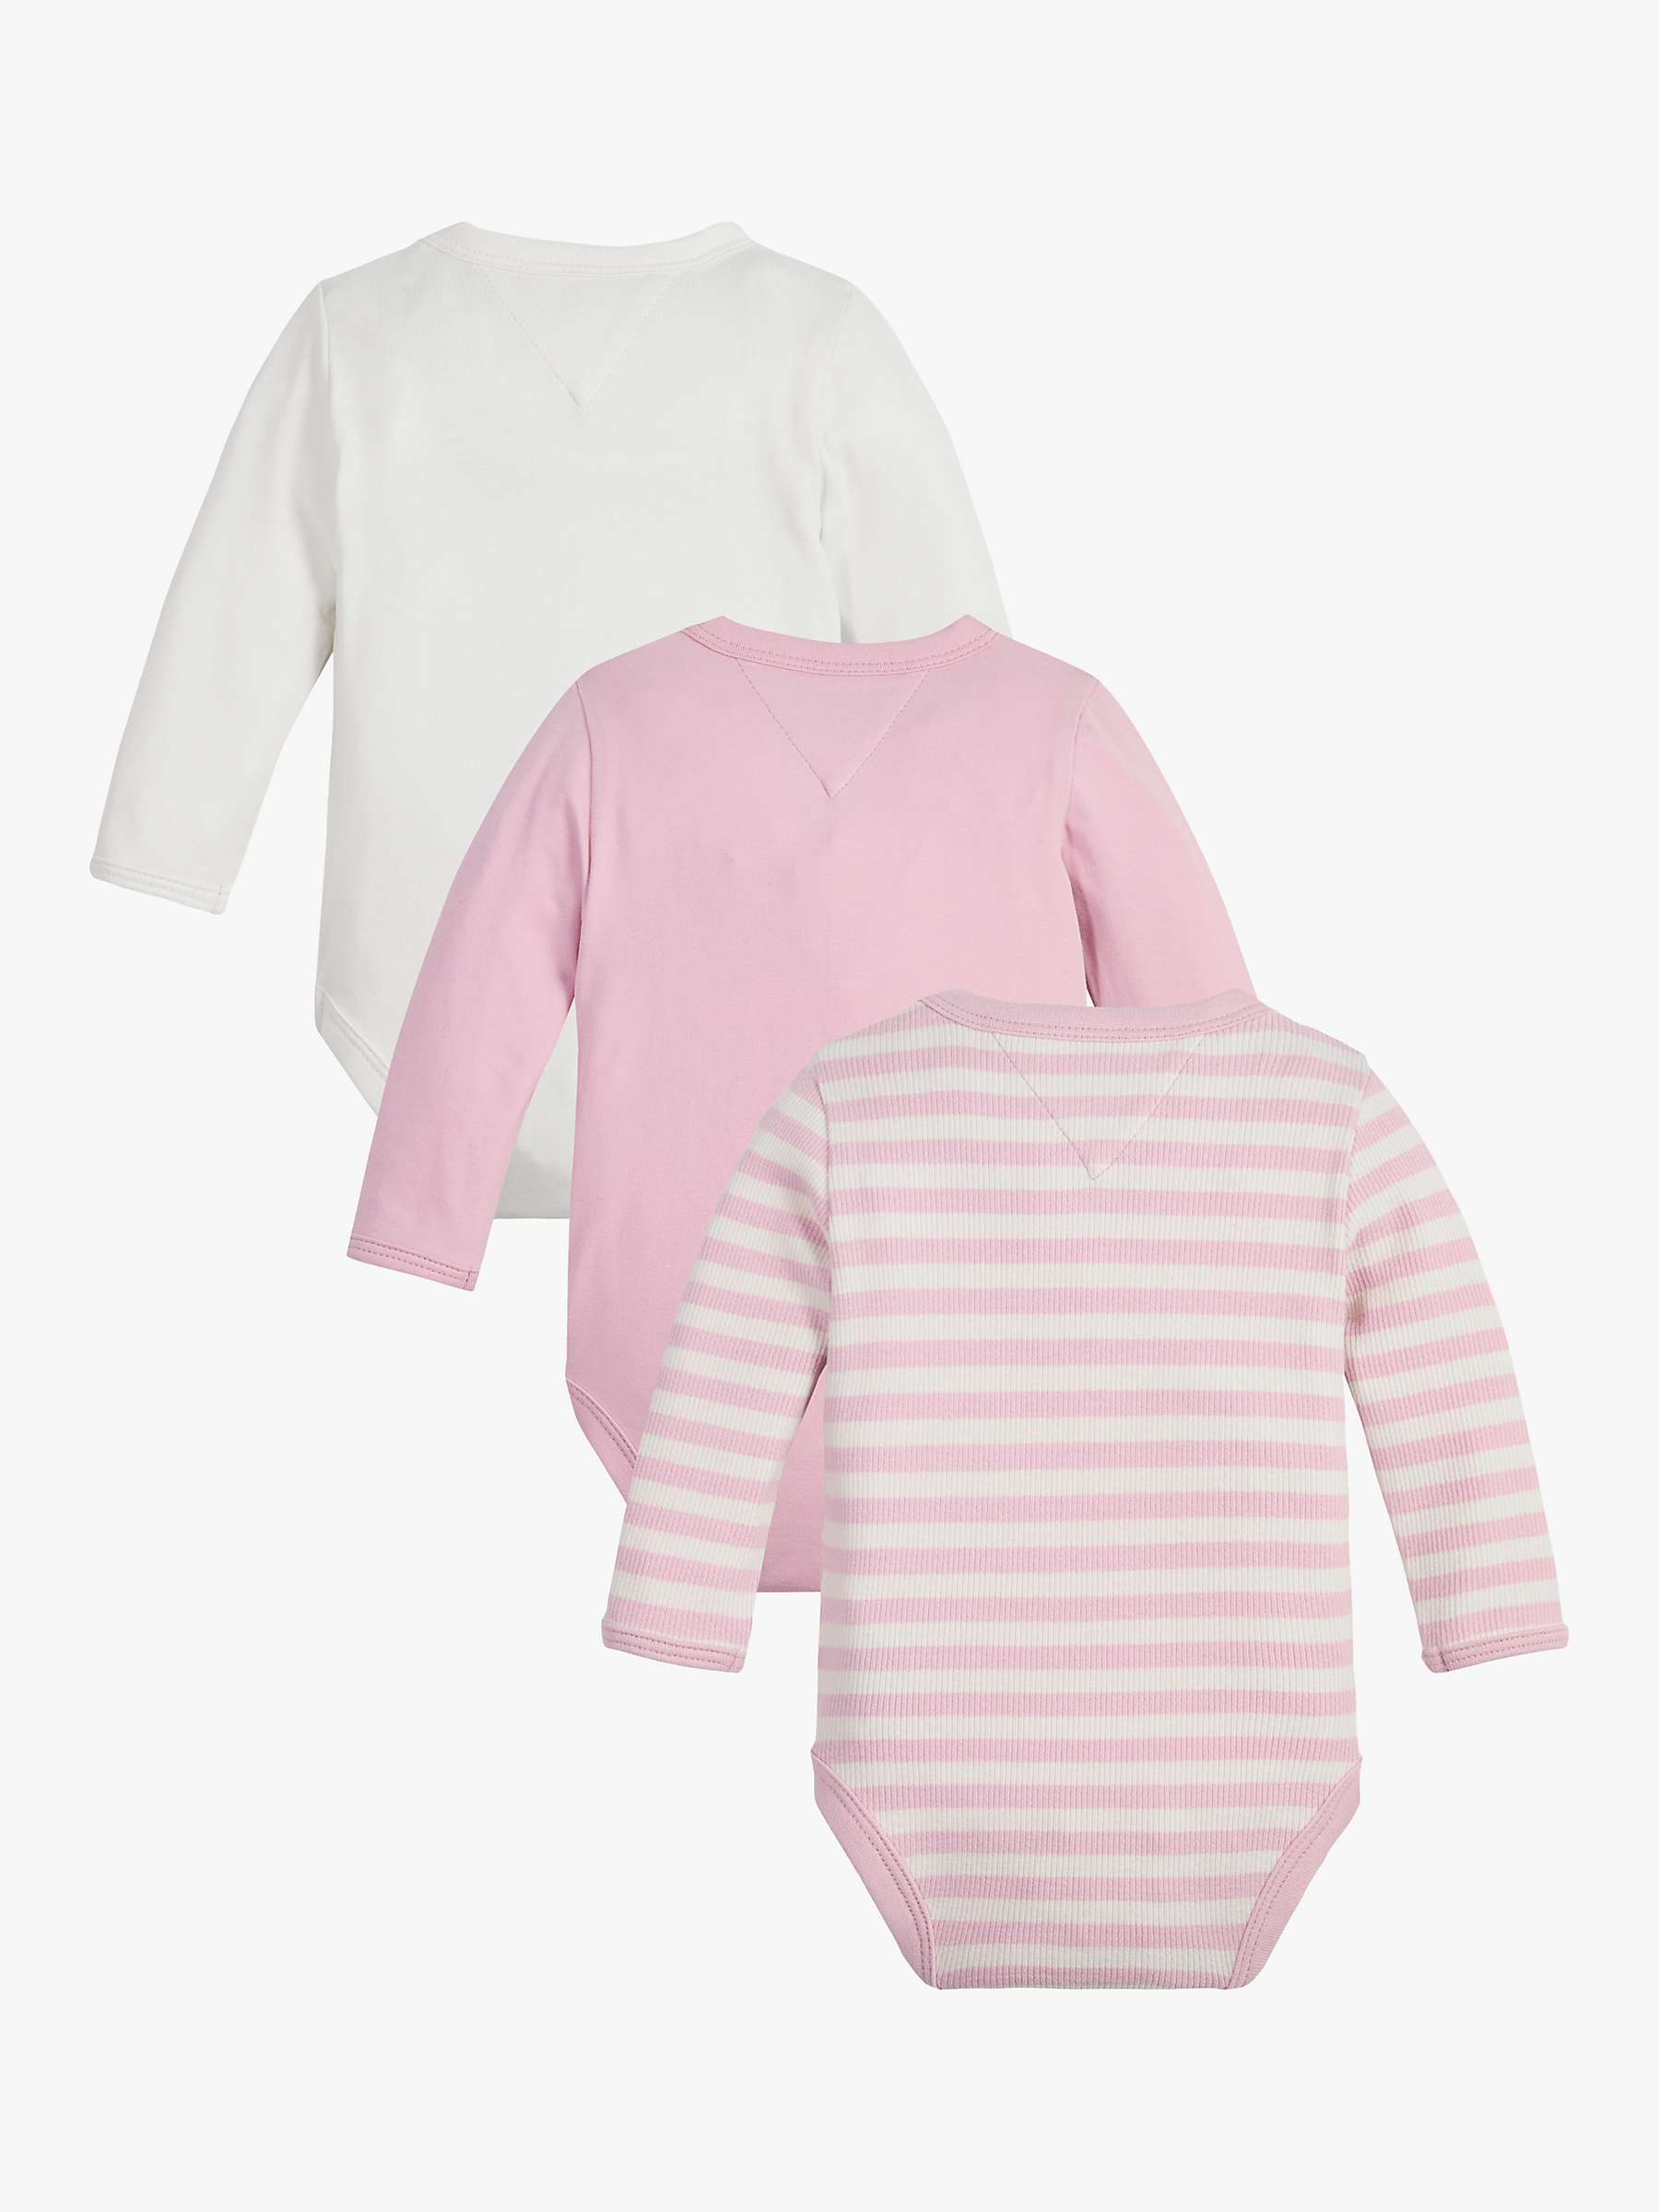 Buy Tommy Hilfiger Baby Bodysuits Gift Set, Pack of 3 Online at johnlewis.com